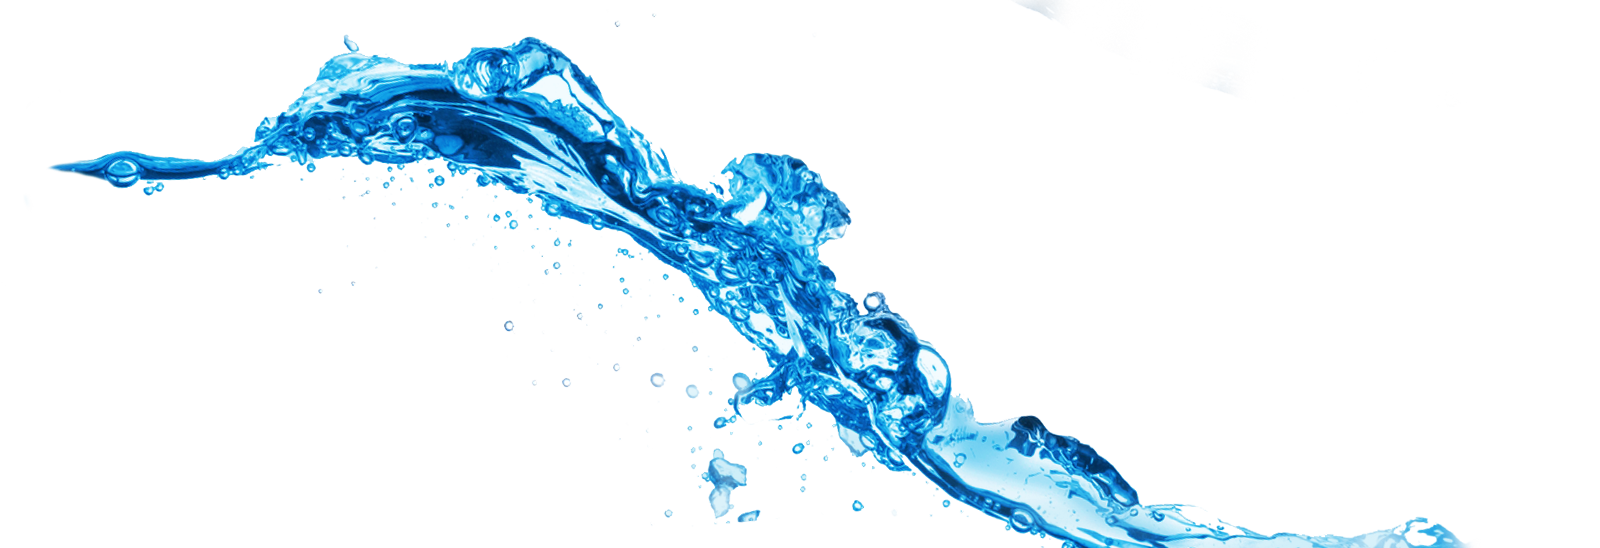 Image of splash of water.